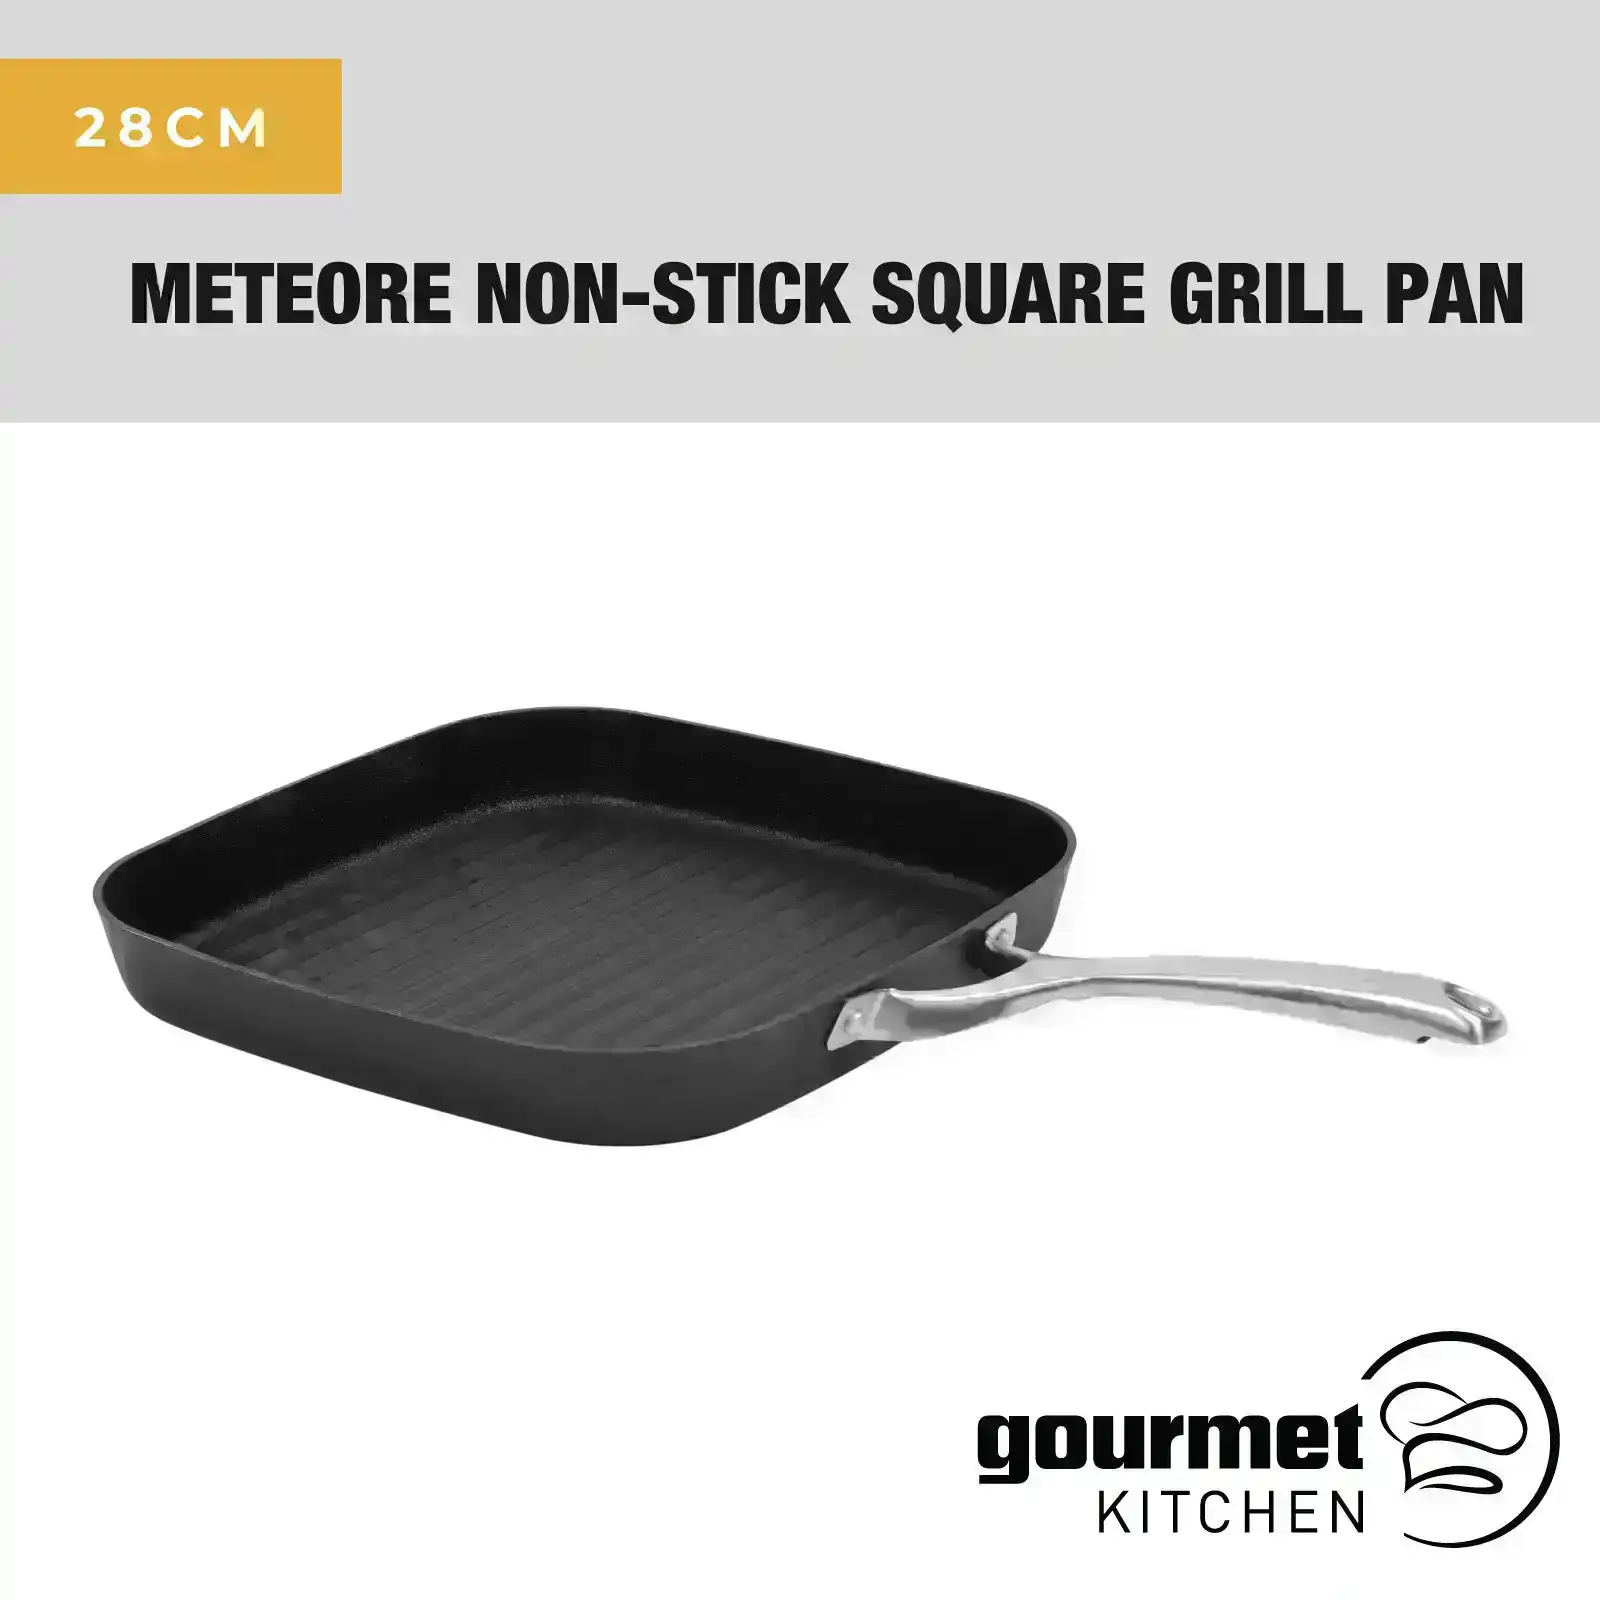 Gourmet Kitchen Meteore Non-Stick Square Grill Pan 28cm